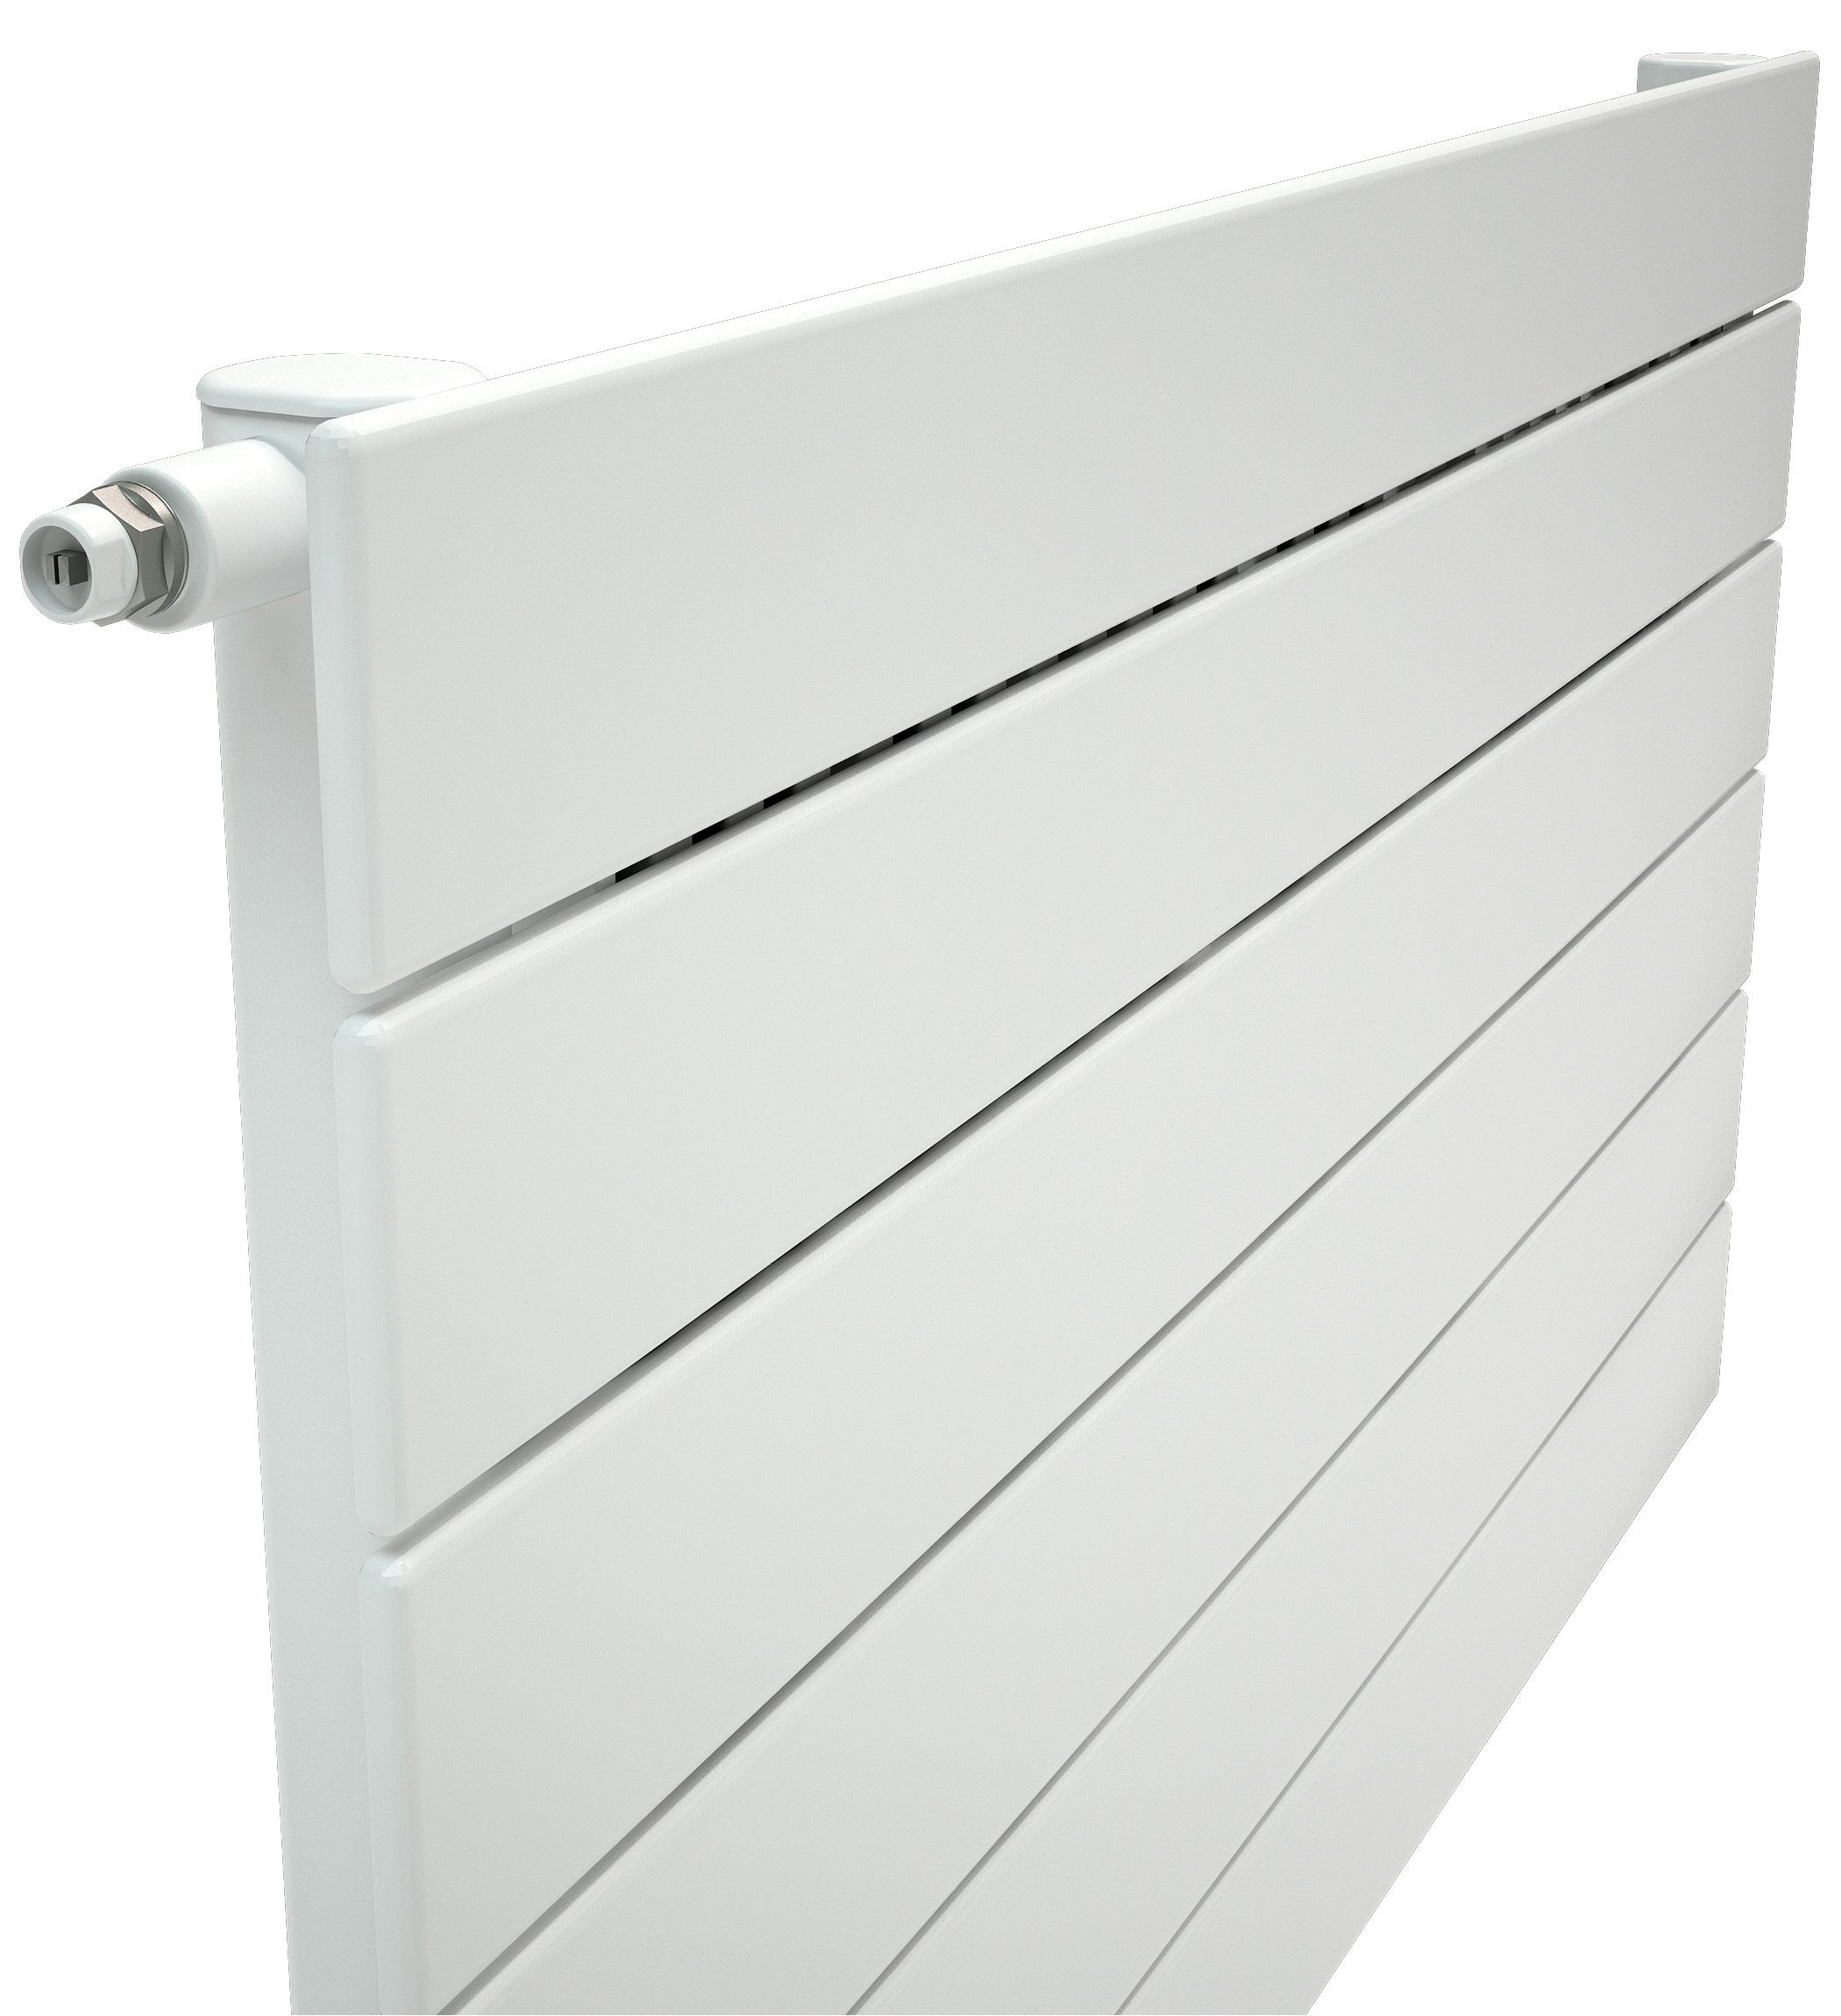 Image of Henrad Verona Single Panel Designer Radiator - White 592 x 1800 mm